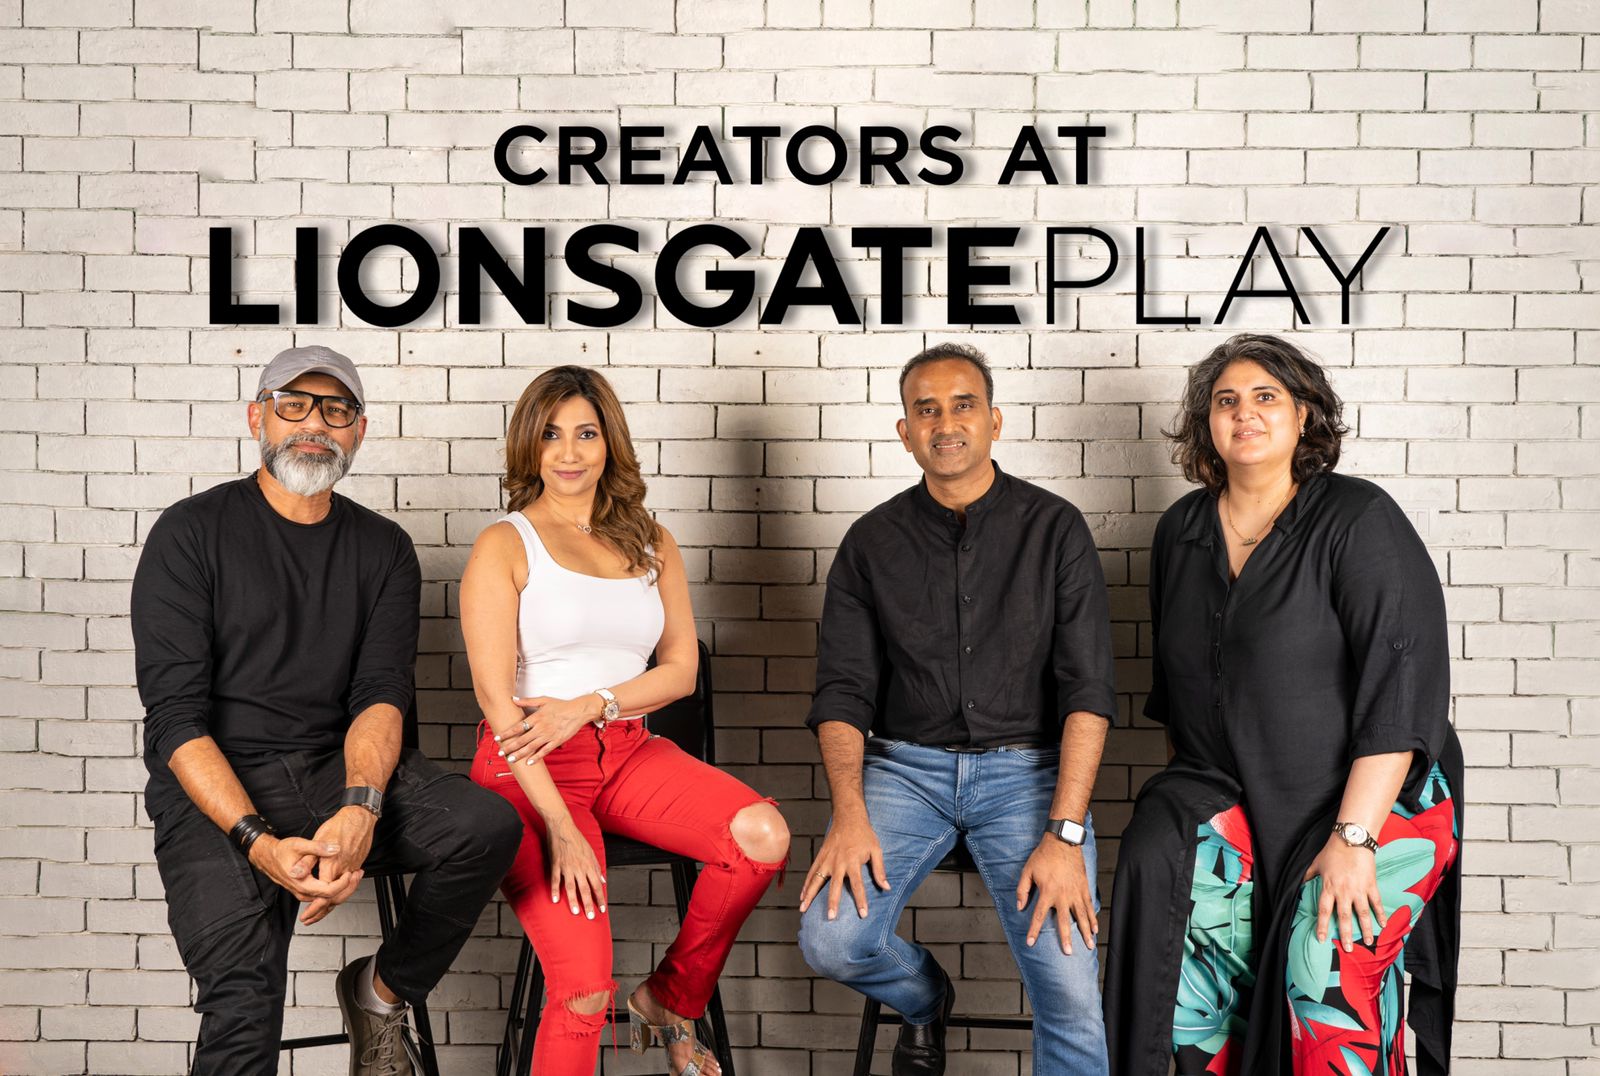 Lionsgate play